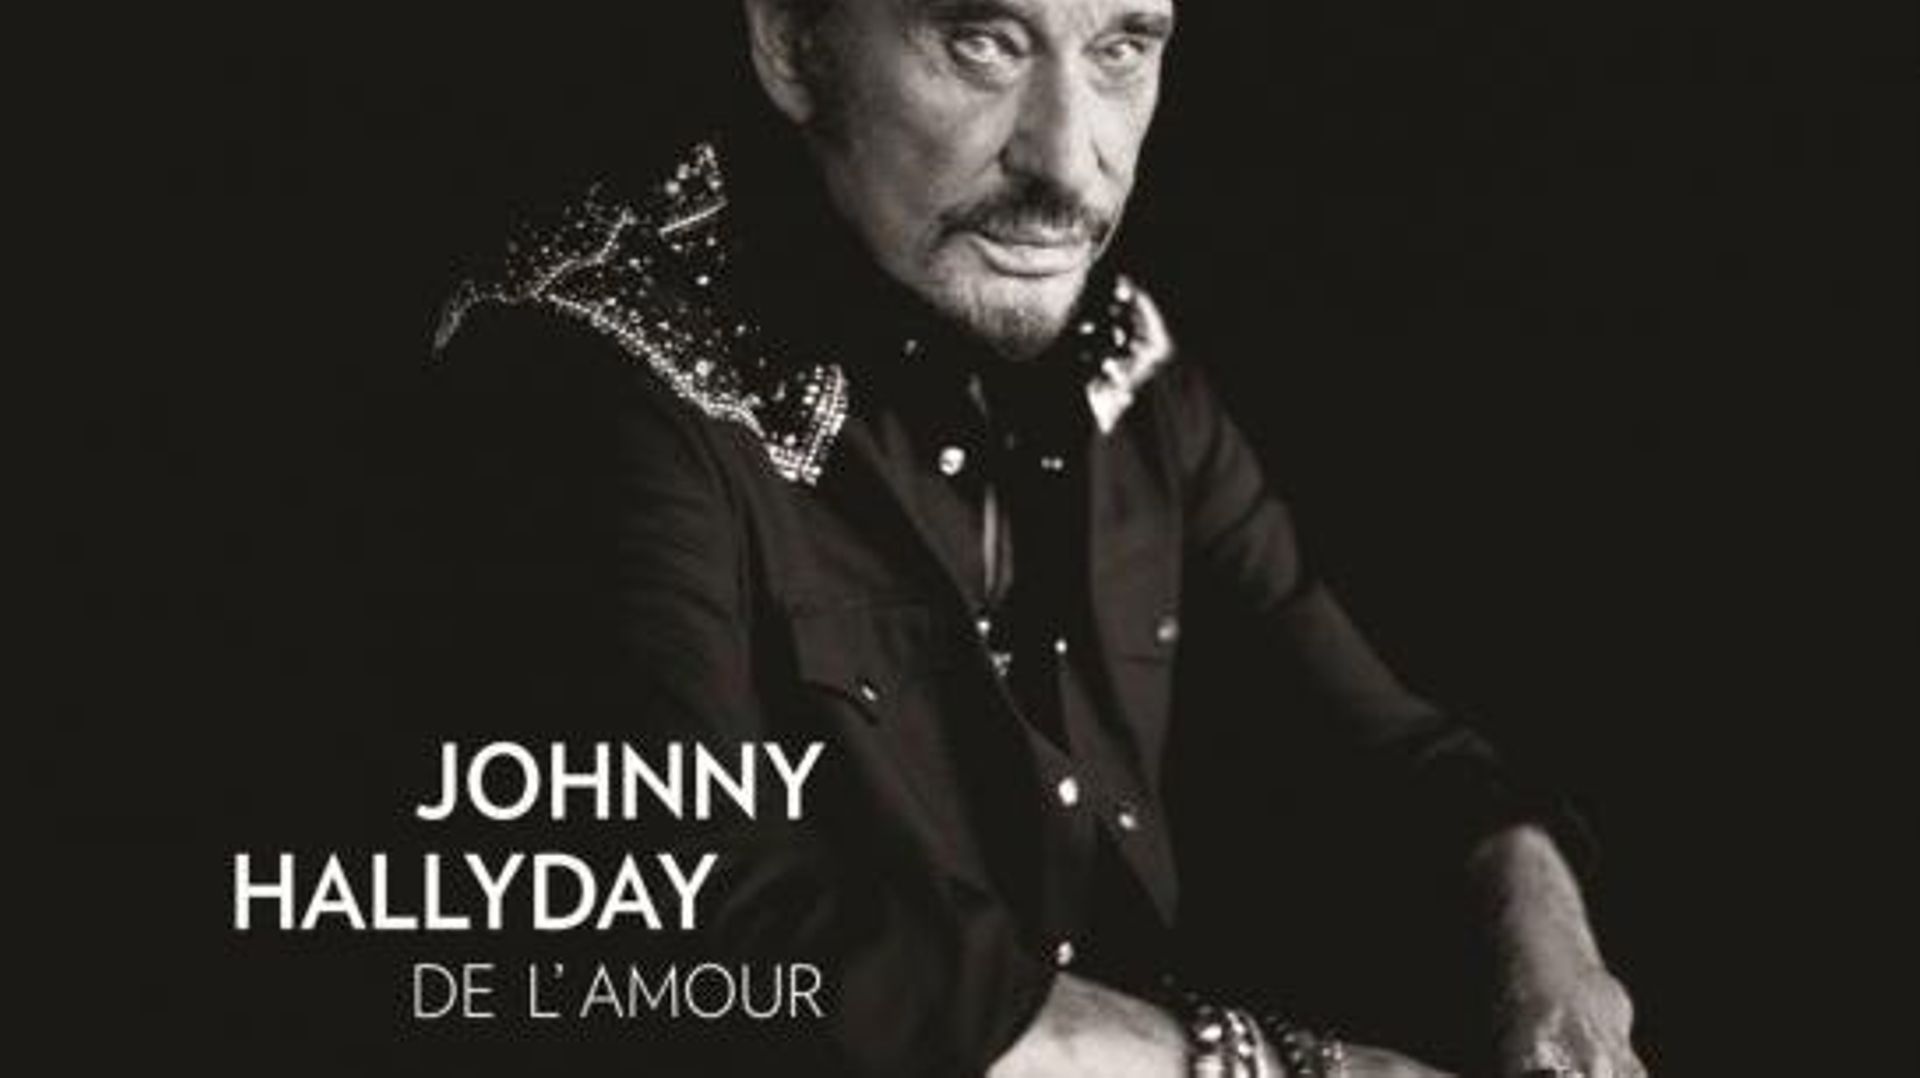 Johnny Hallyday, "De l'Amour" (Warner)